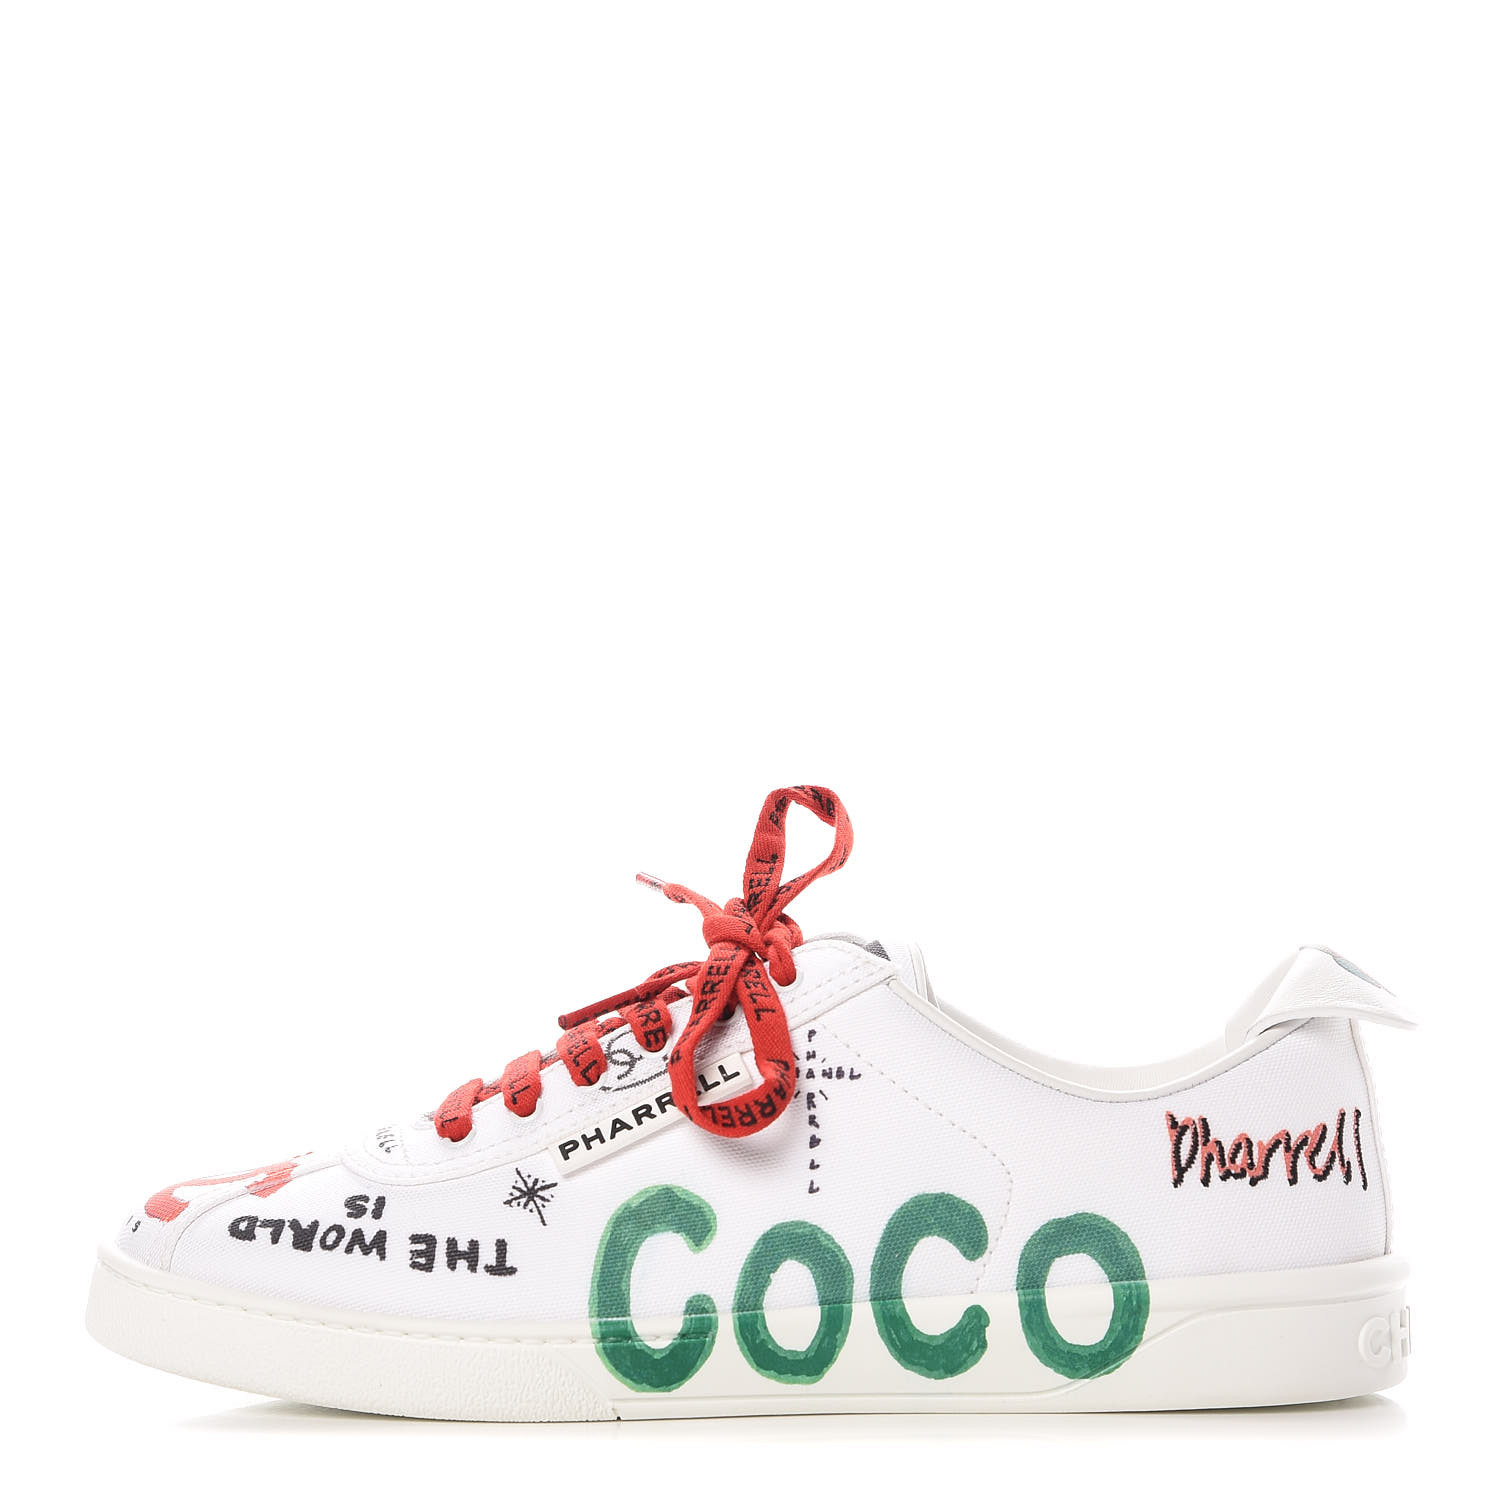 pharrell coco chanel sneakers